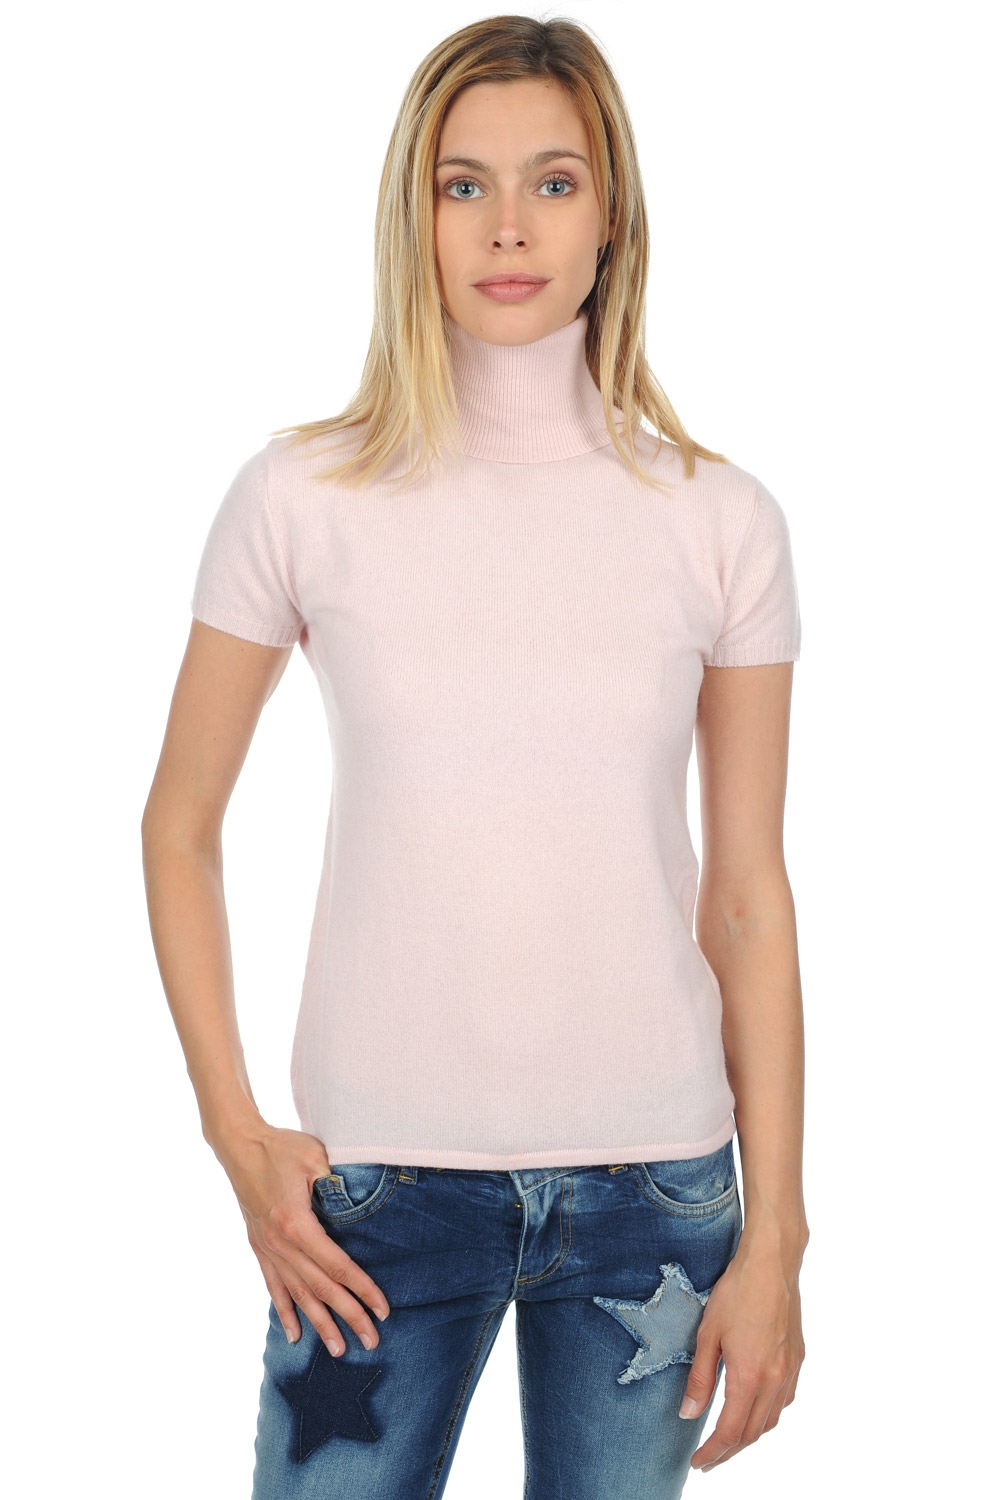 Cashmere cashmere donna gli intramontabile olivia rosa pallido 3xl